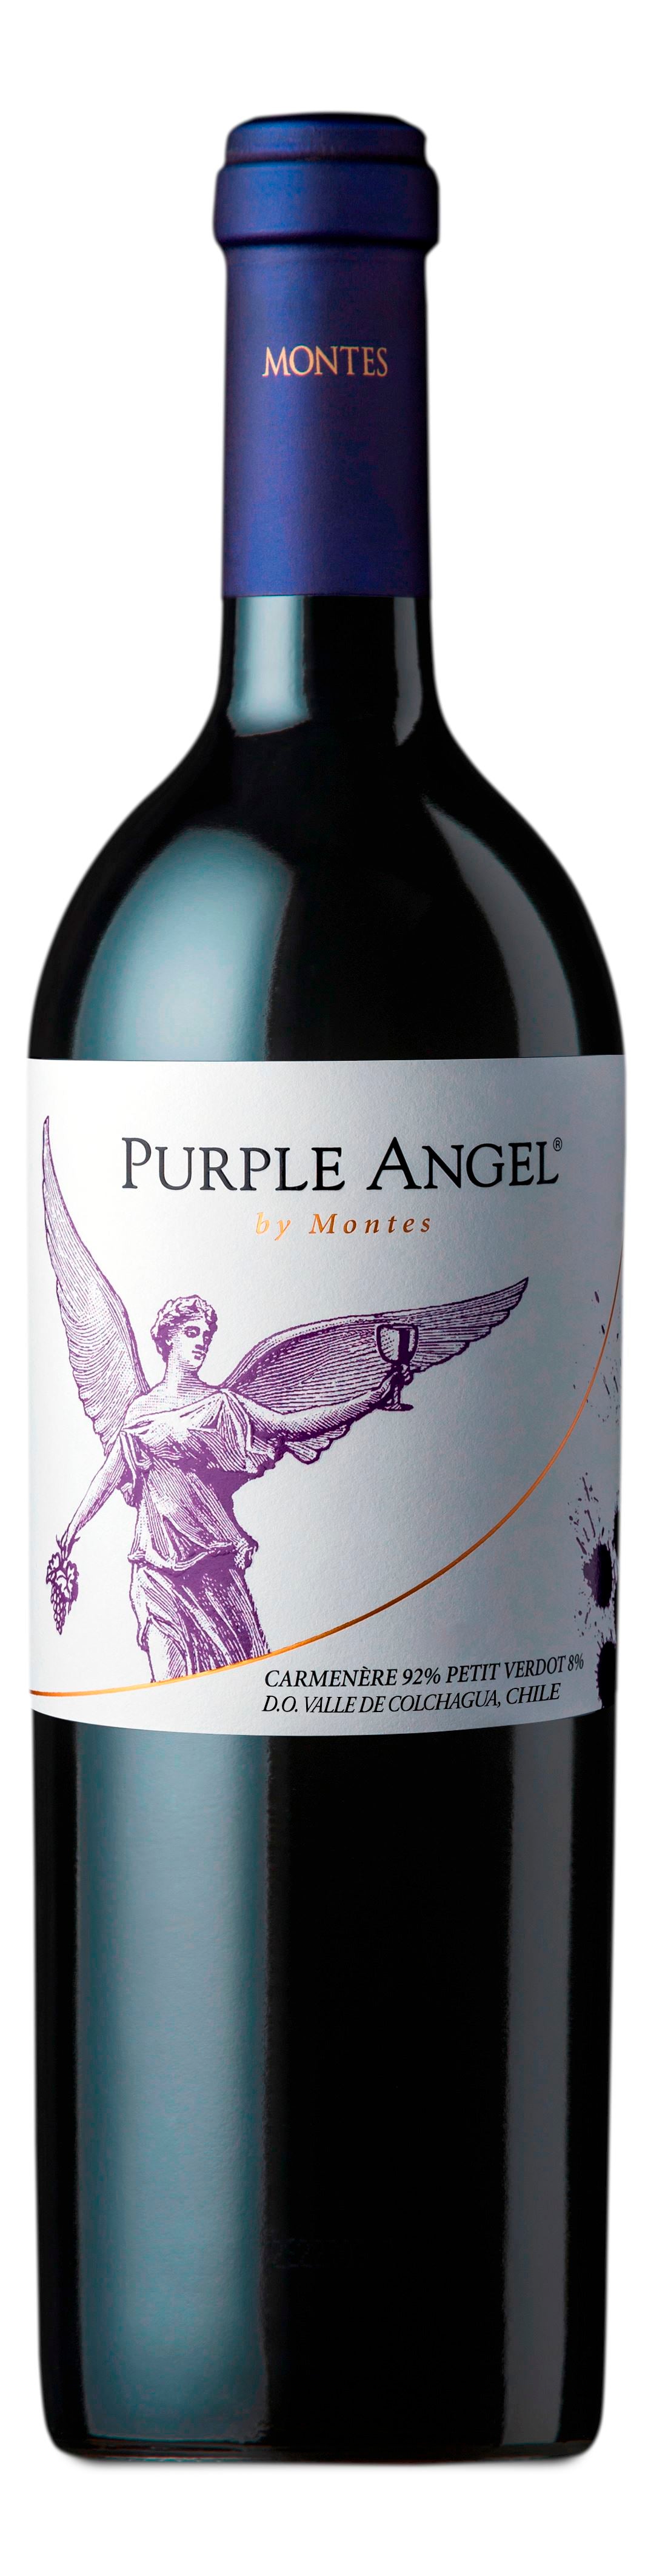 Montes, `Purple Angel` Colchagua, Chile, 2016 Wine Bottle Liberty Wines 